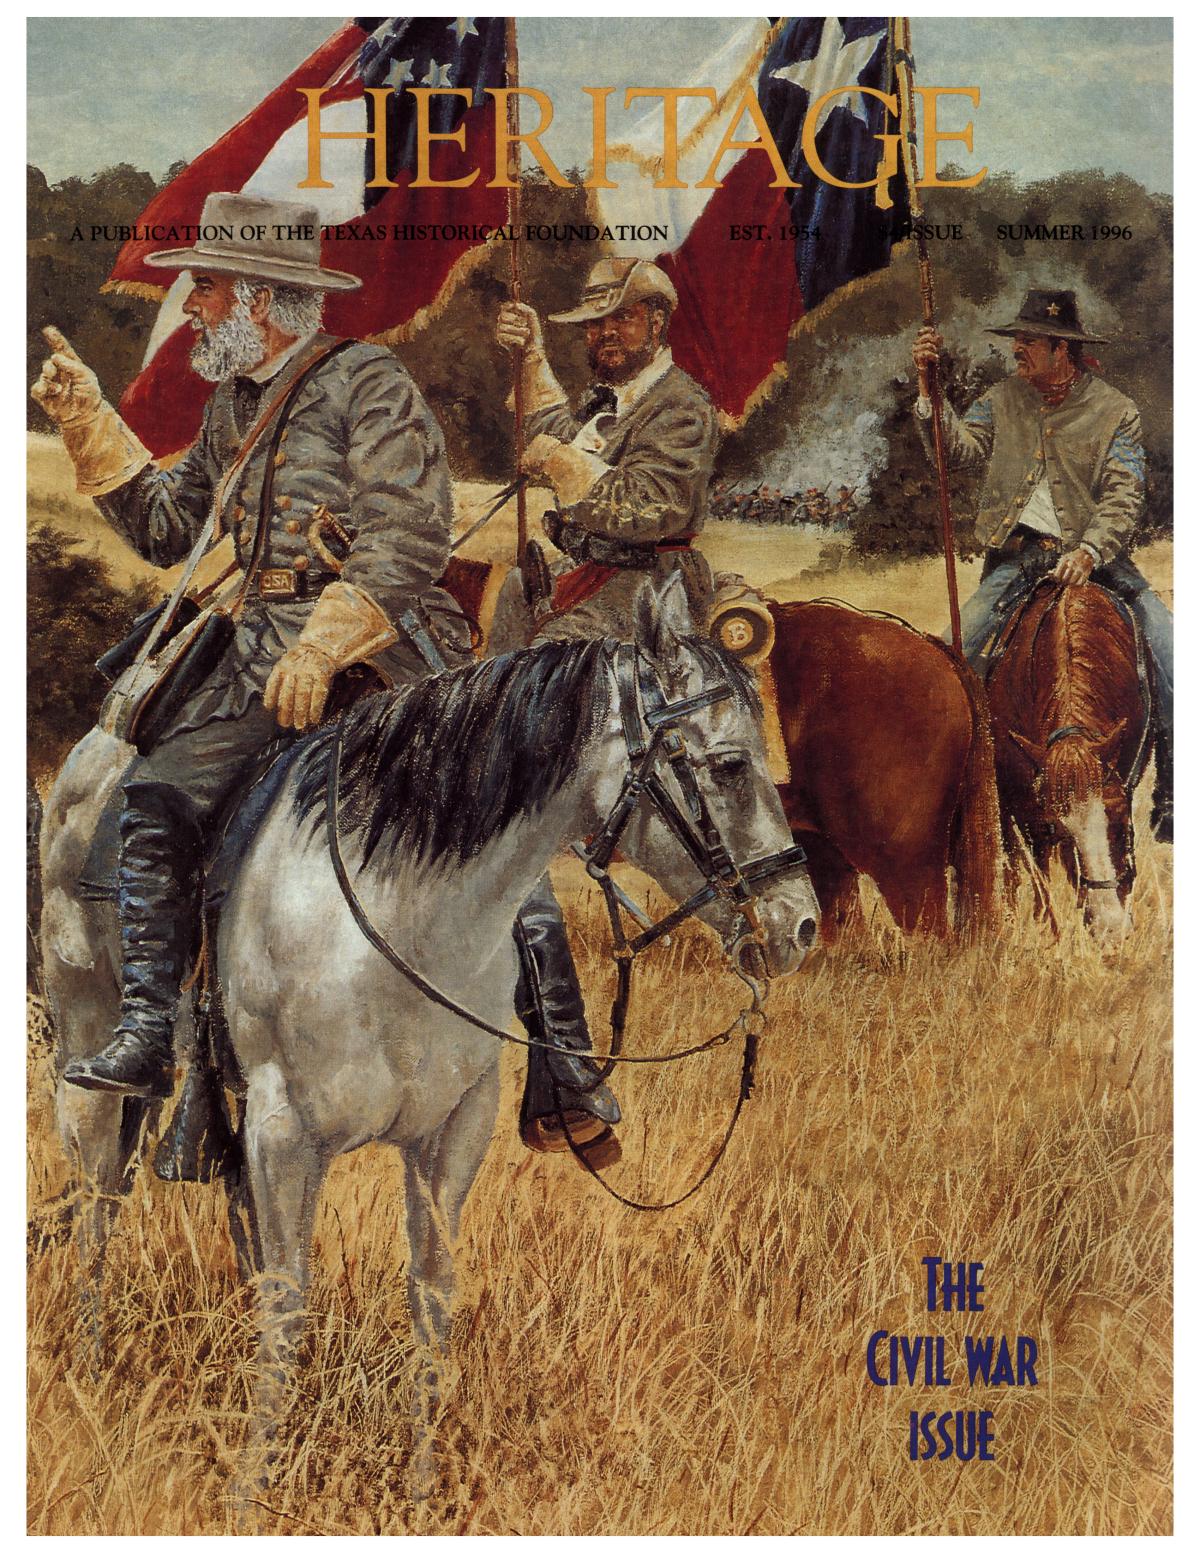 Heritage, Volume 14, Number 3, Summer 1996
                                                
                                                    Front Cover
                                                